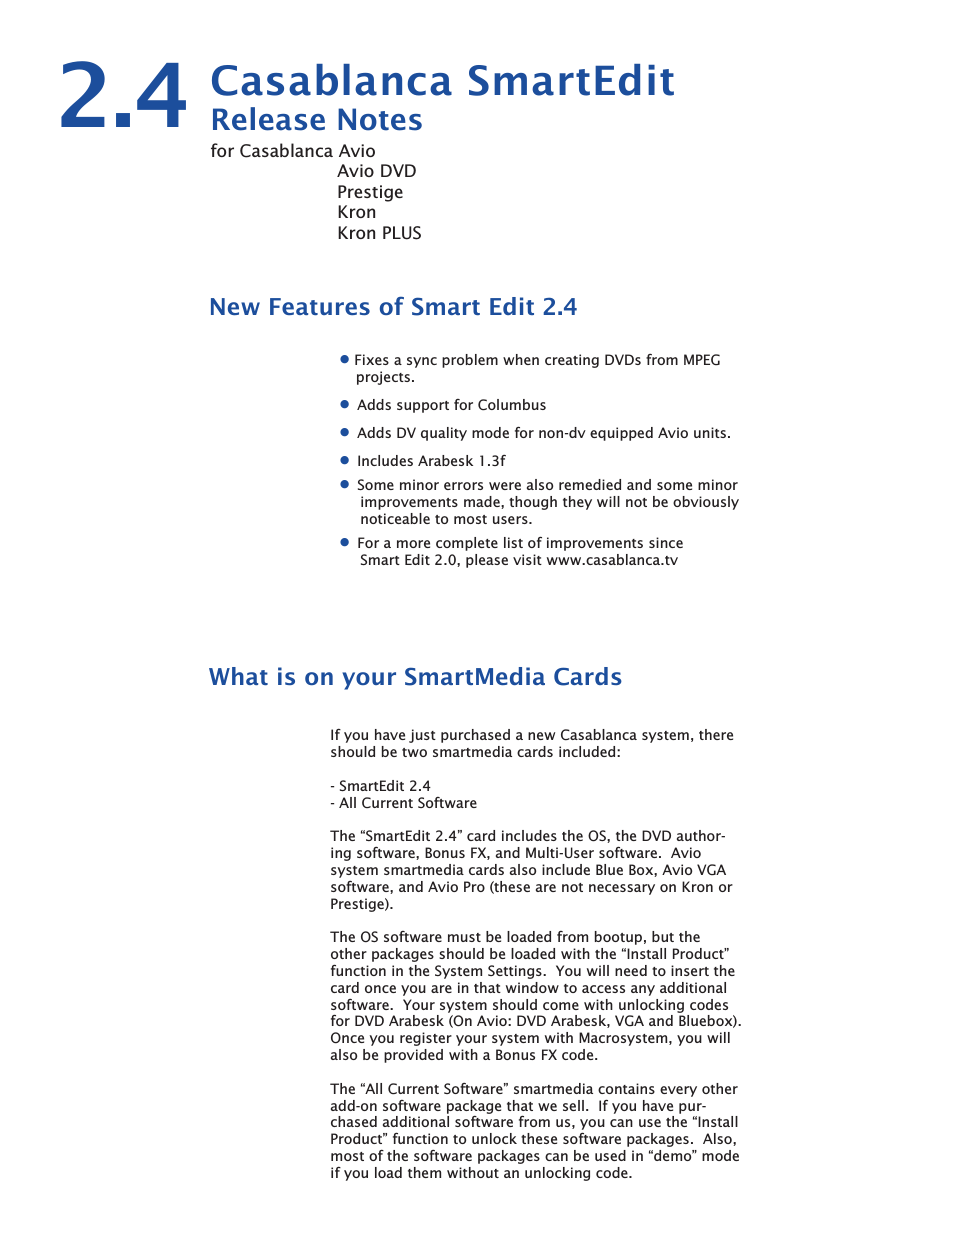 Smart Edit 2.4 Release Notes